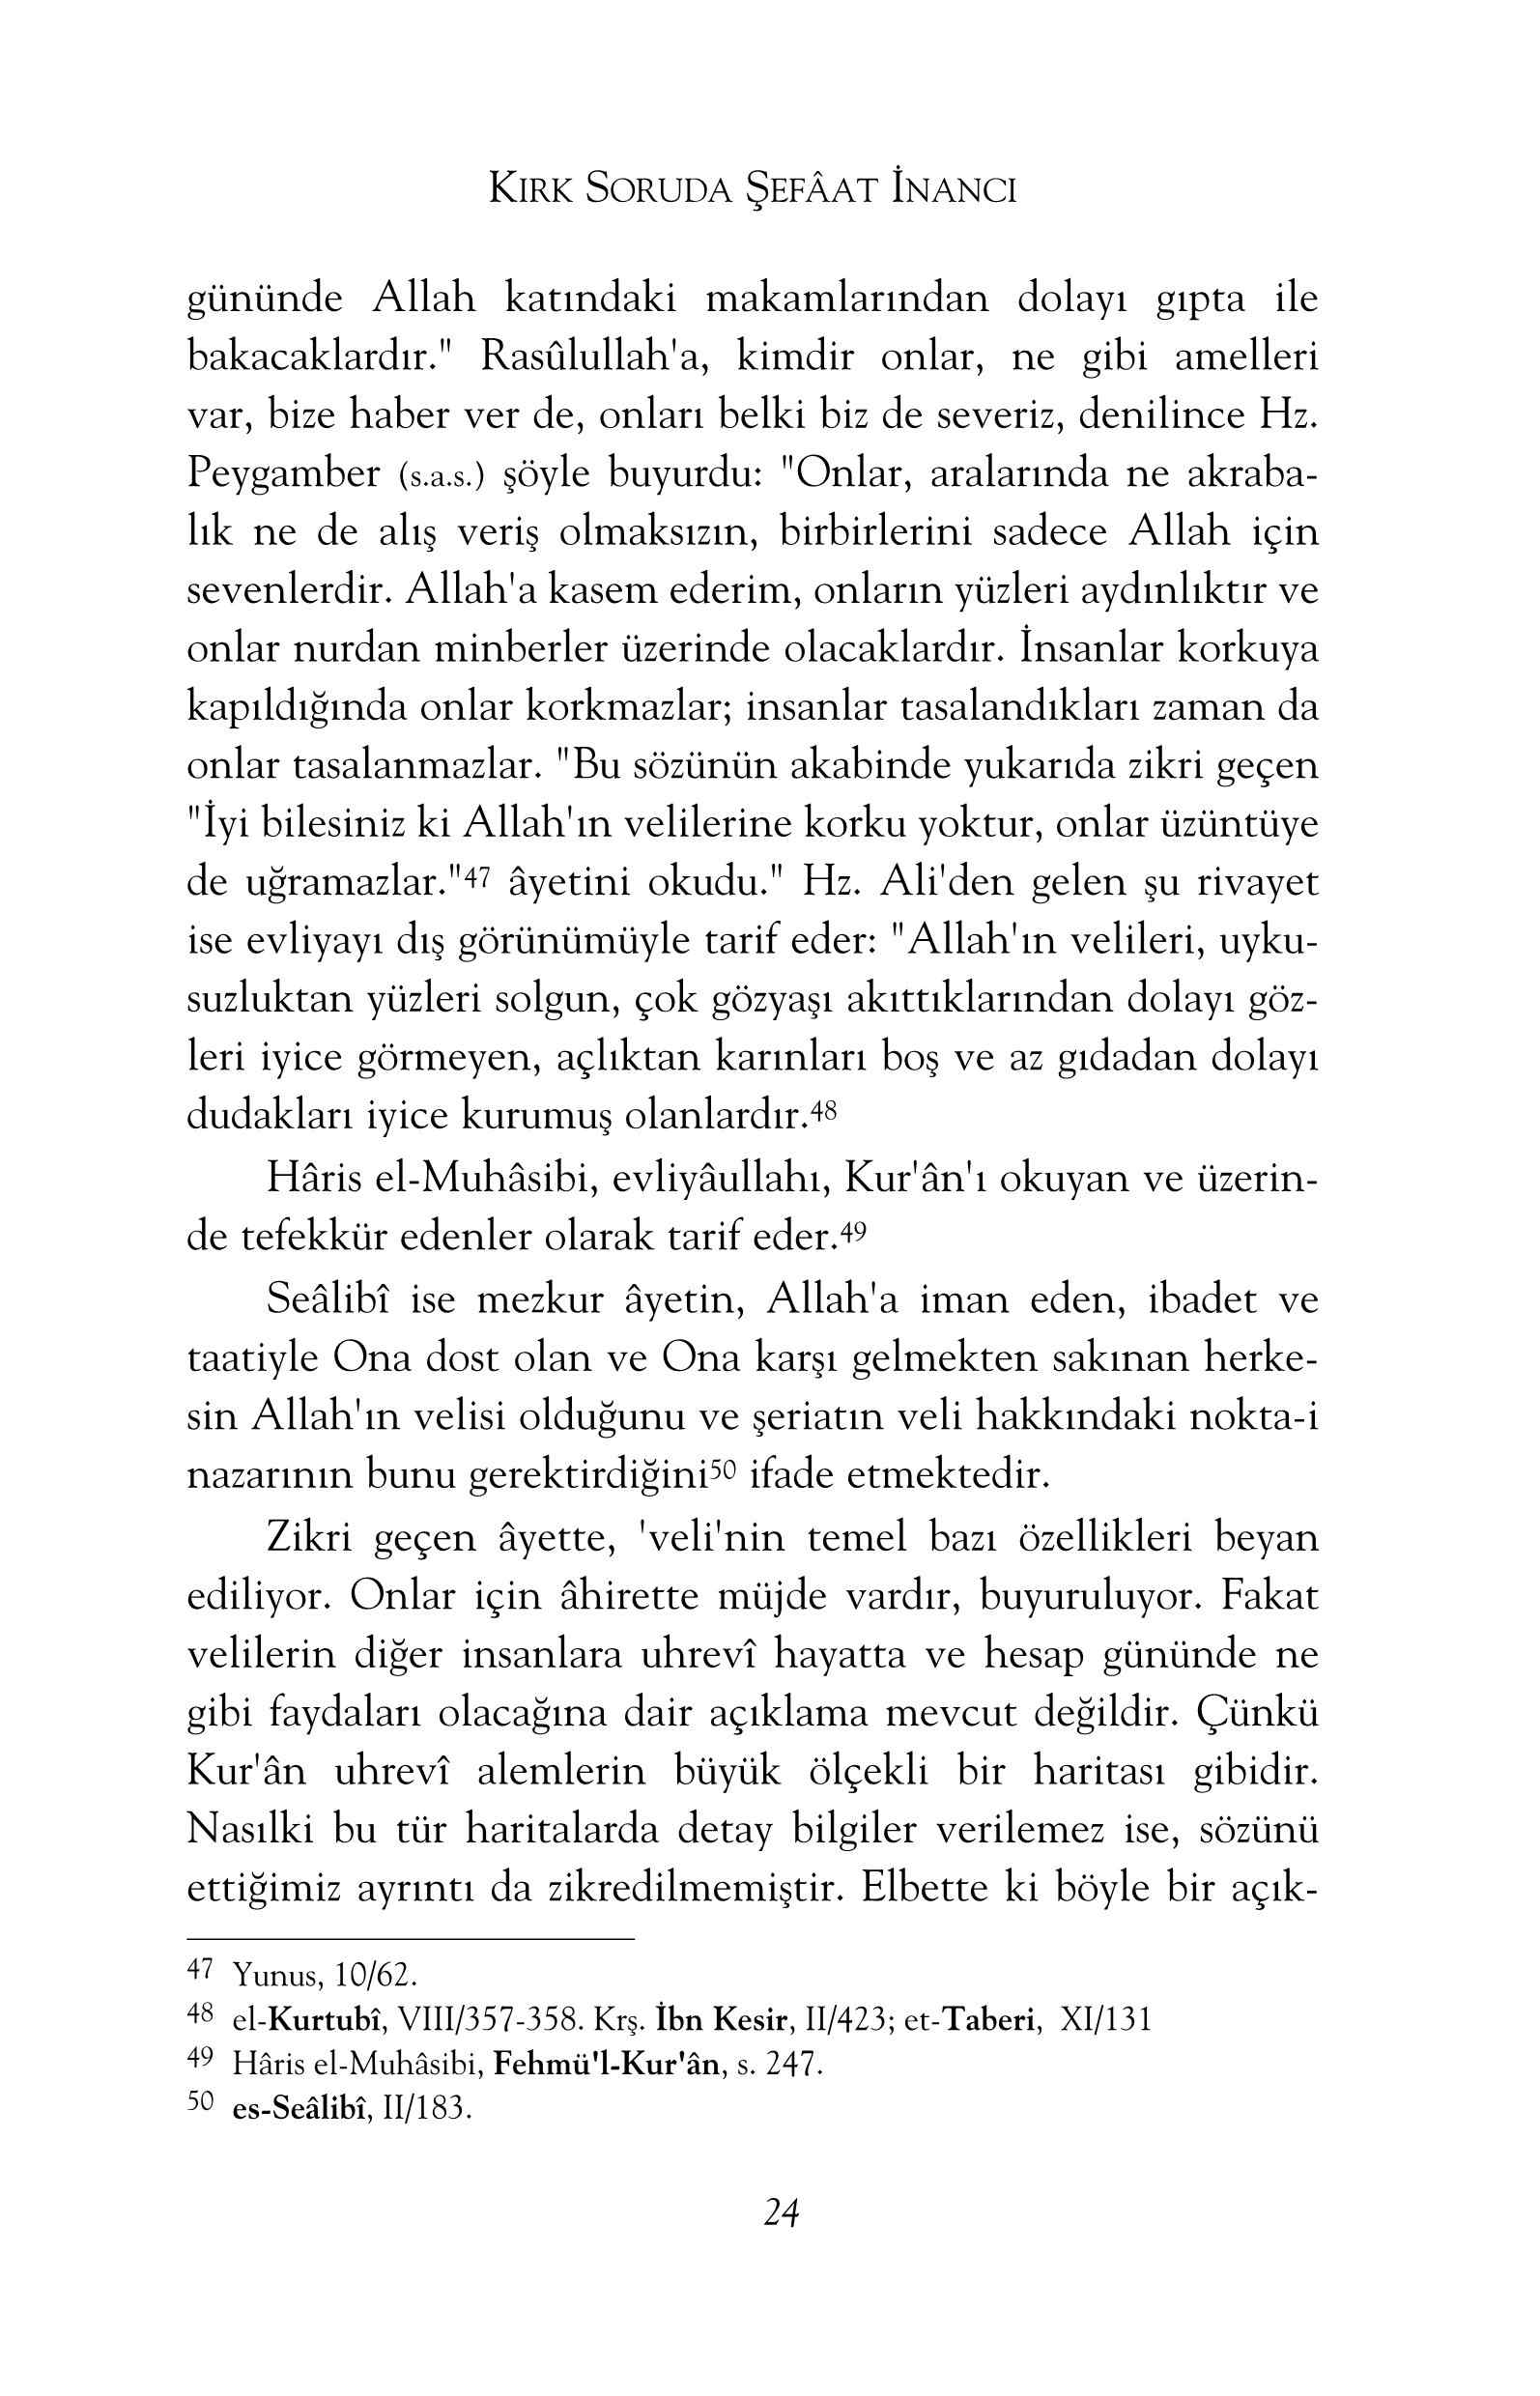 Mesut Erdal - 40 Soruda Kuran ve Sunnete Gore Sefaat Inanci - IsikAkademiY.pdf, 184-Sayfa 